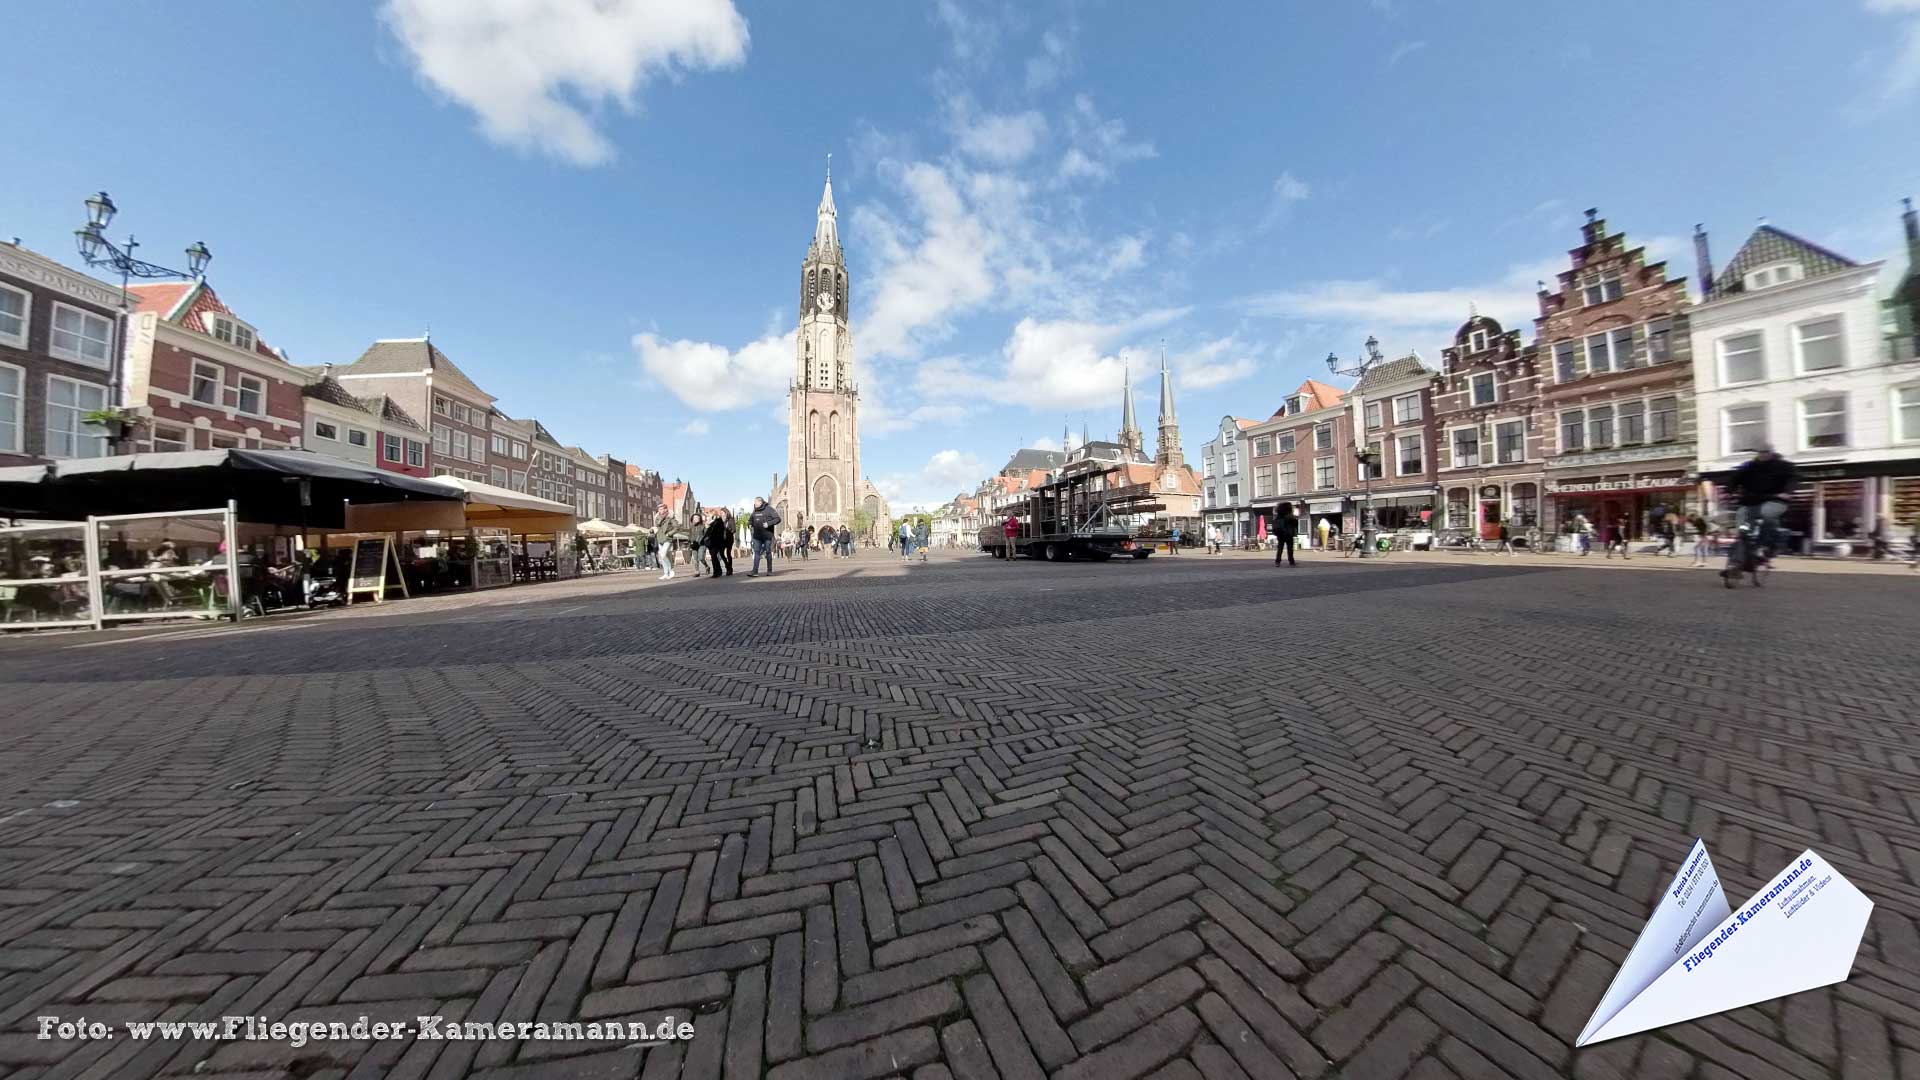 Nieuwe Kerk, Market, Stadhuis in Delft (NL) - 360°-Panorama